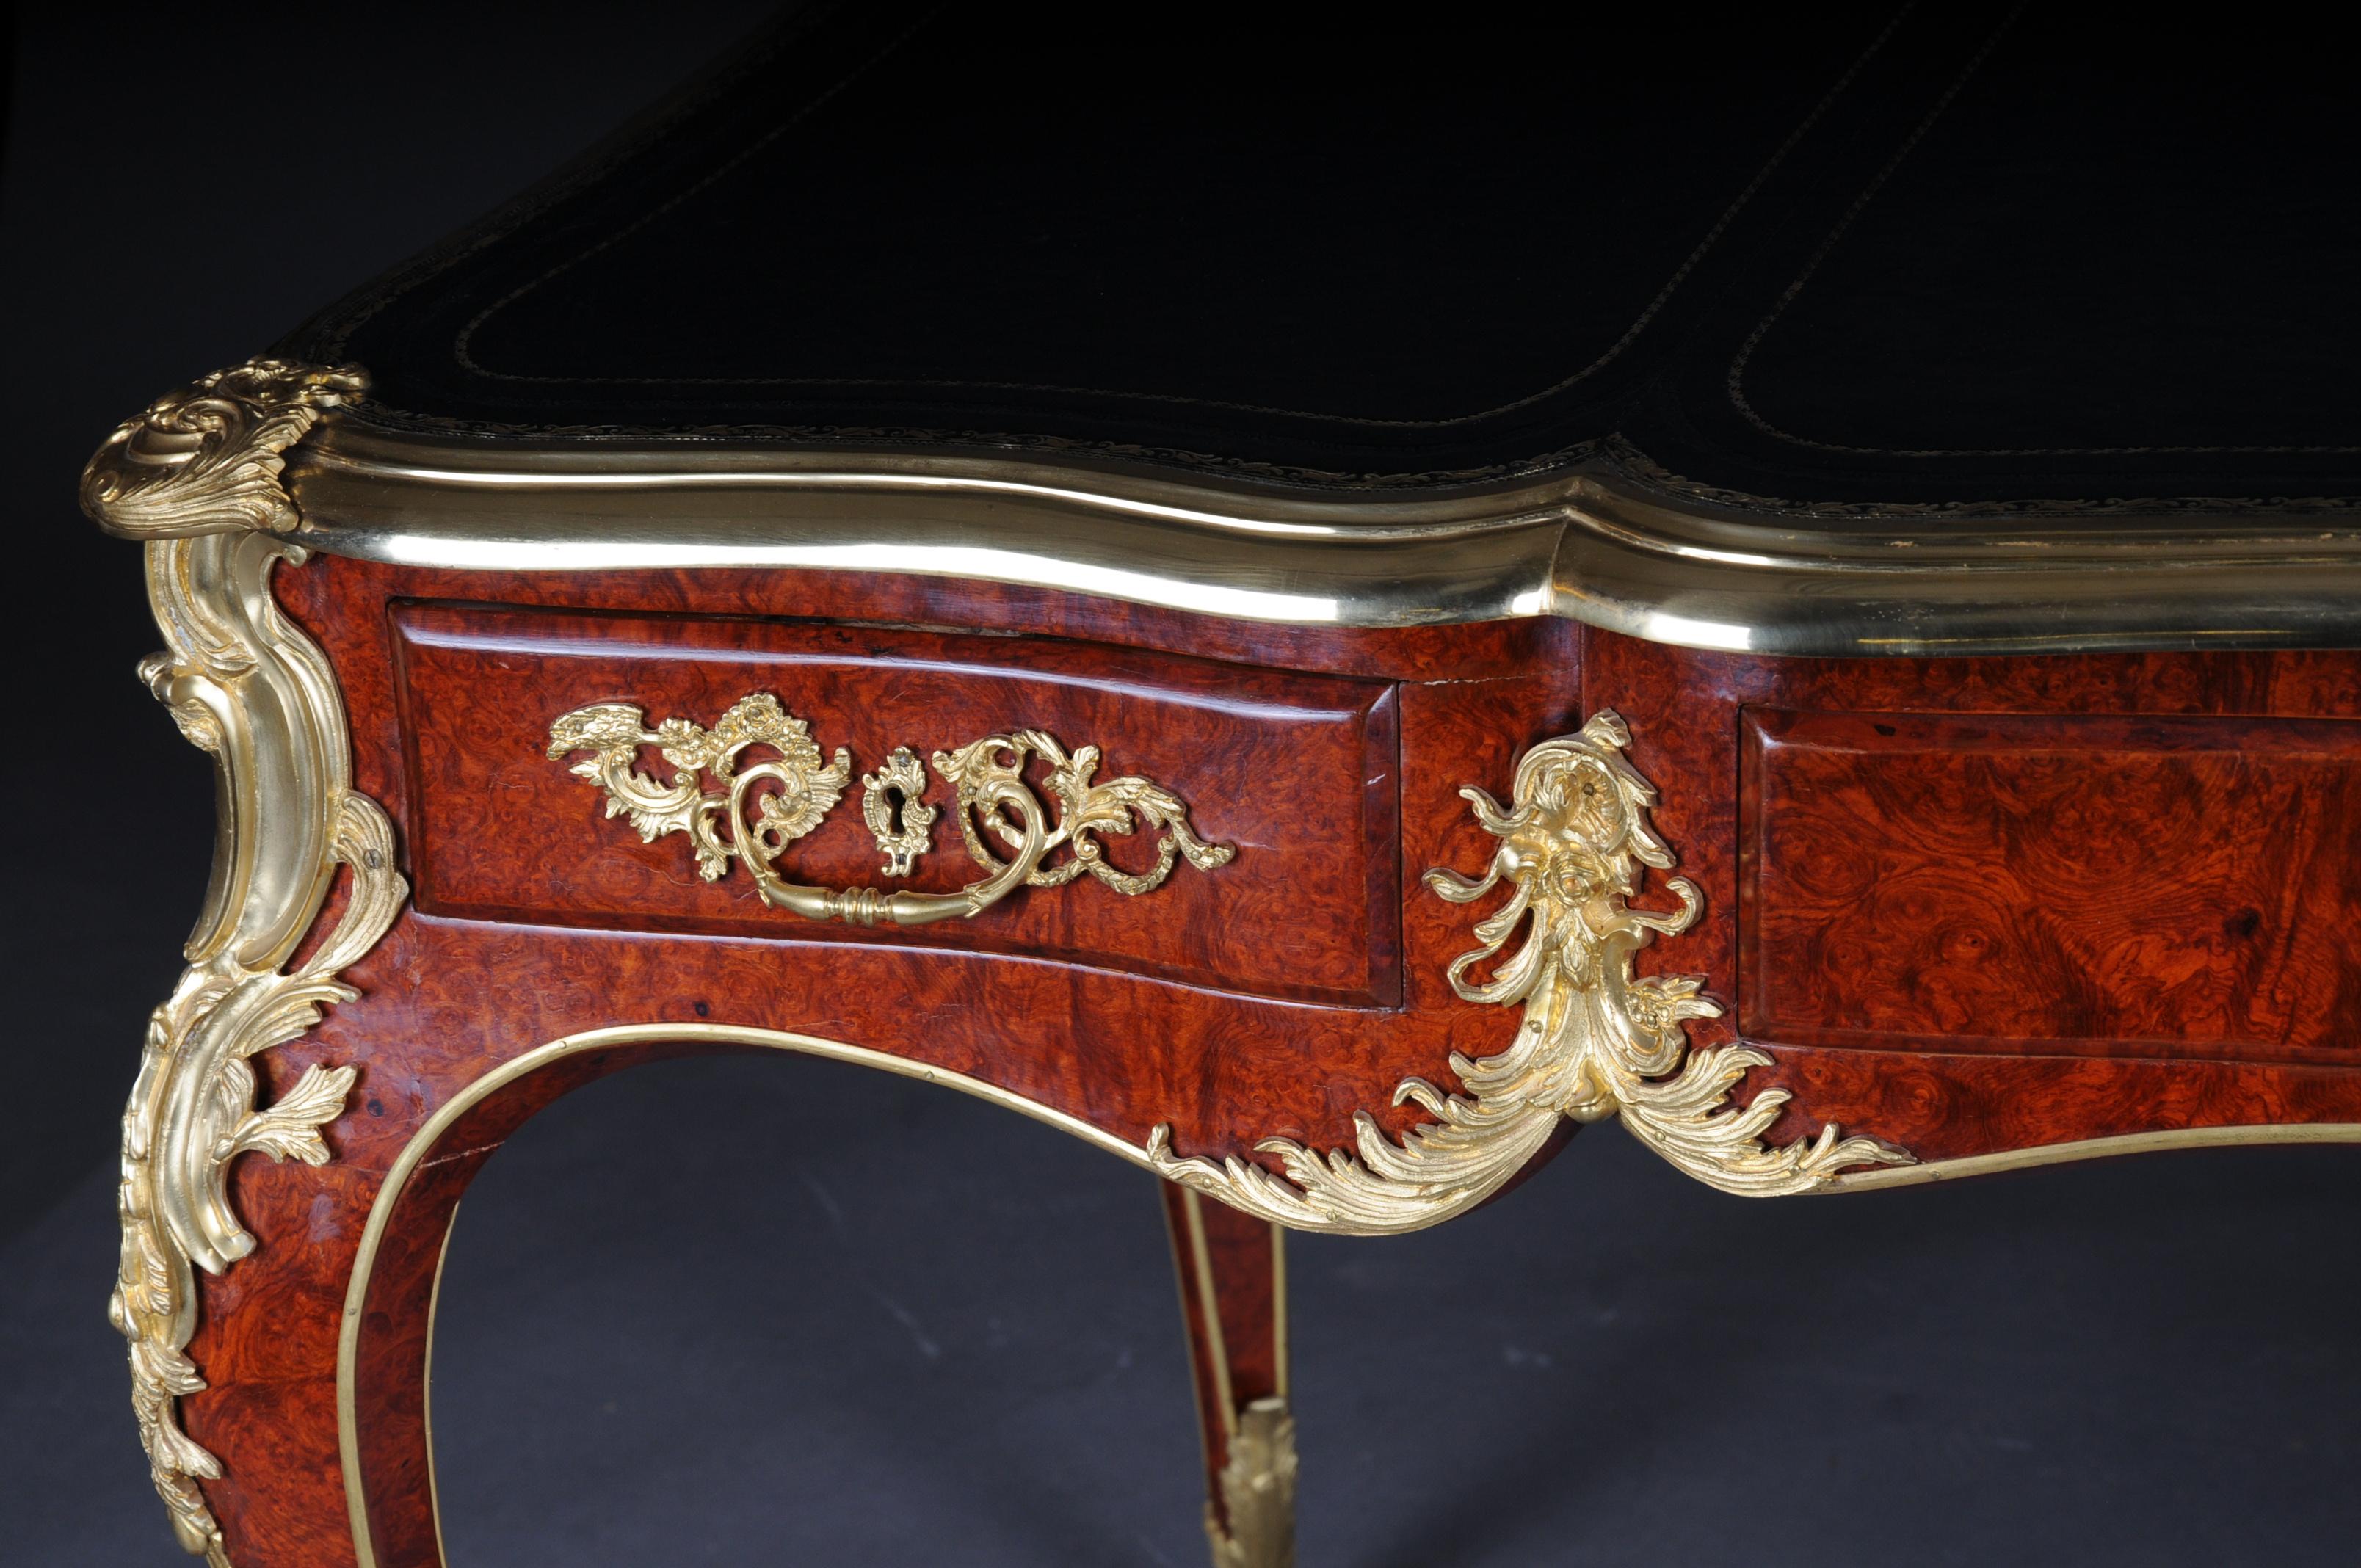 Royal desk / bureau plat in Louis XV style For Sale 11